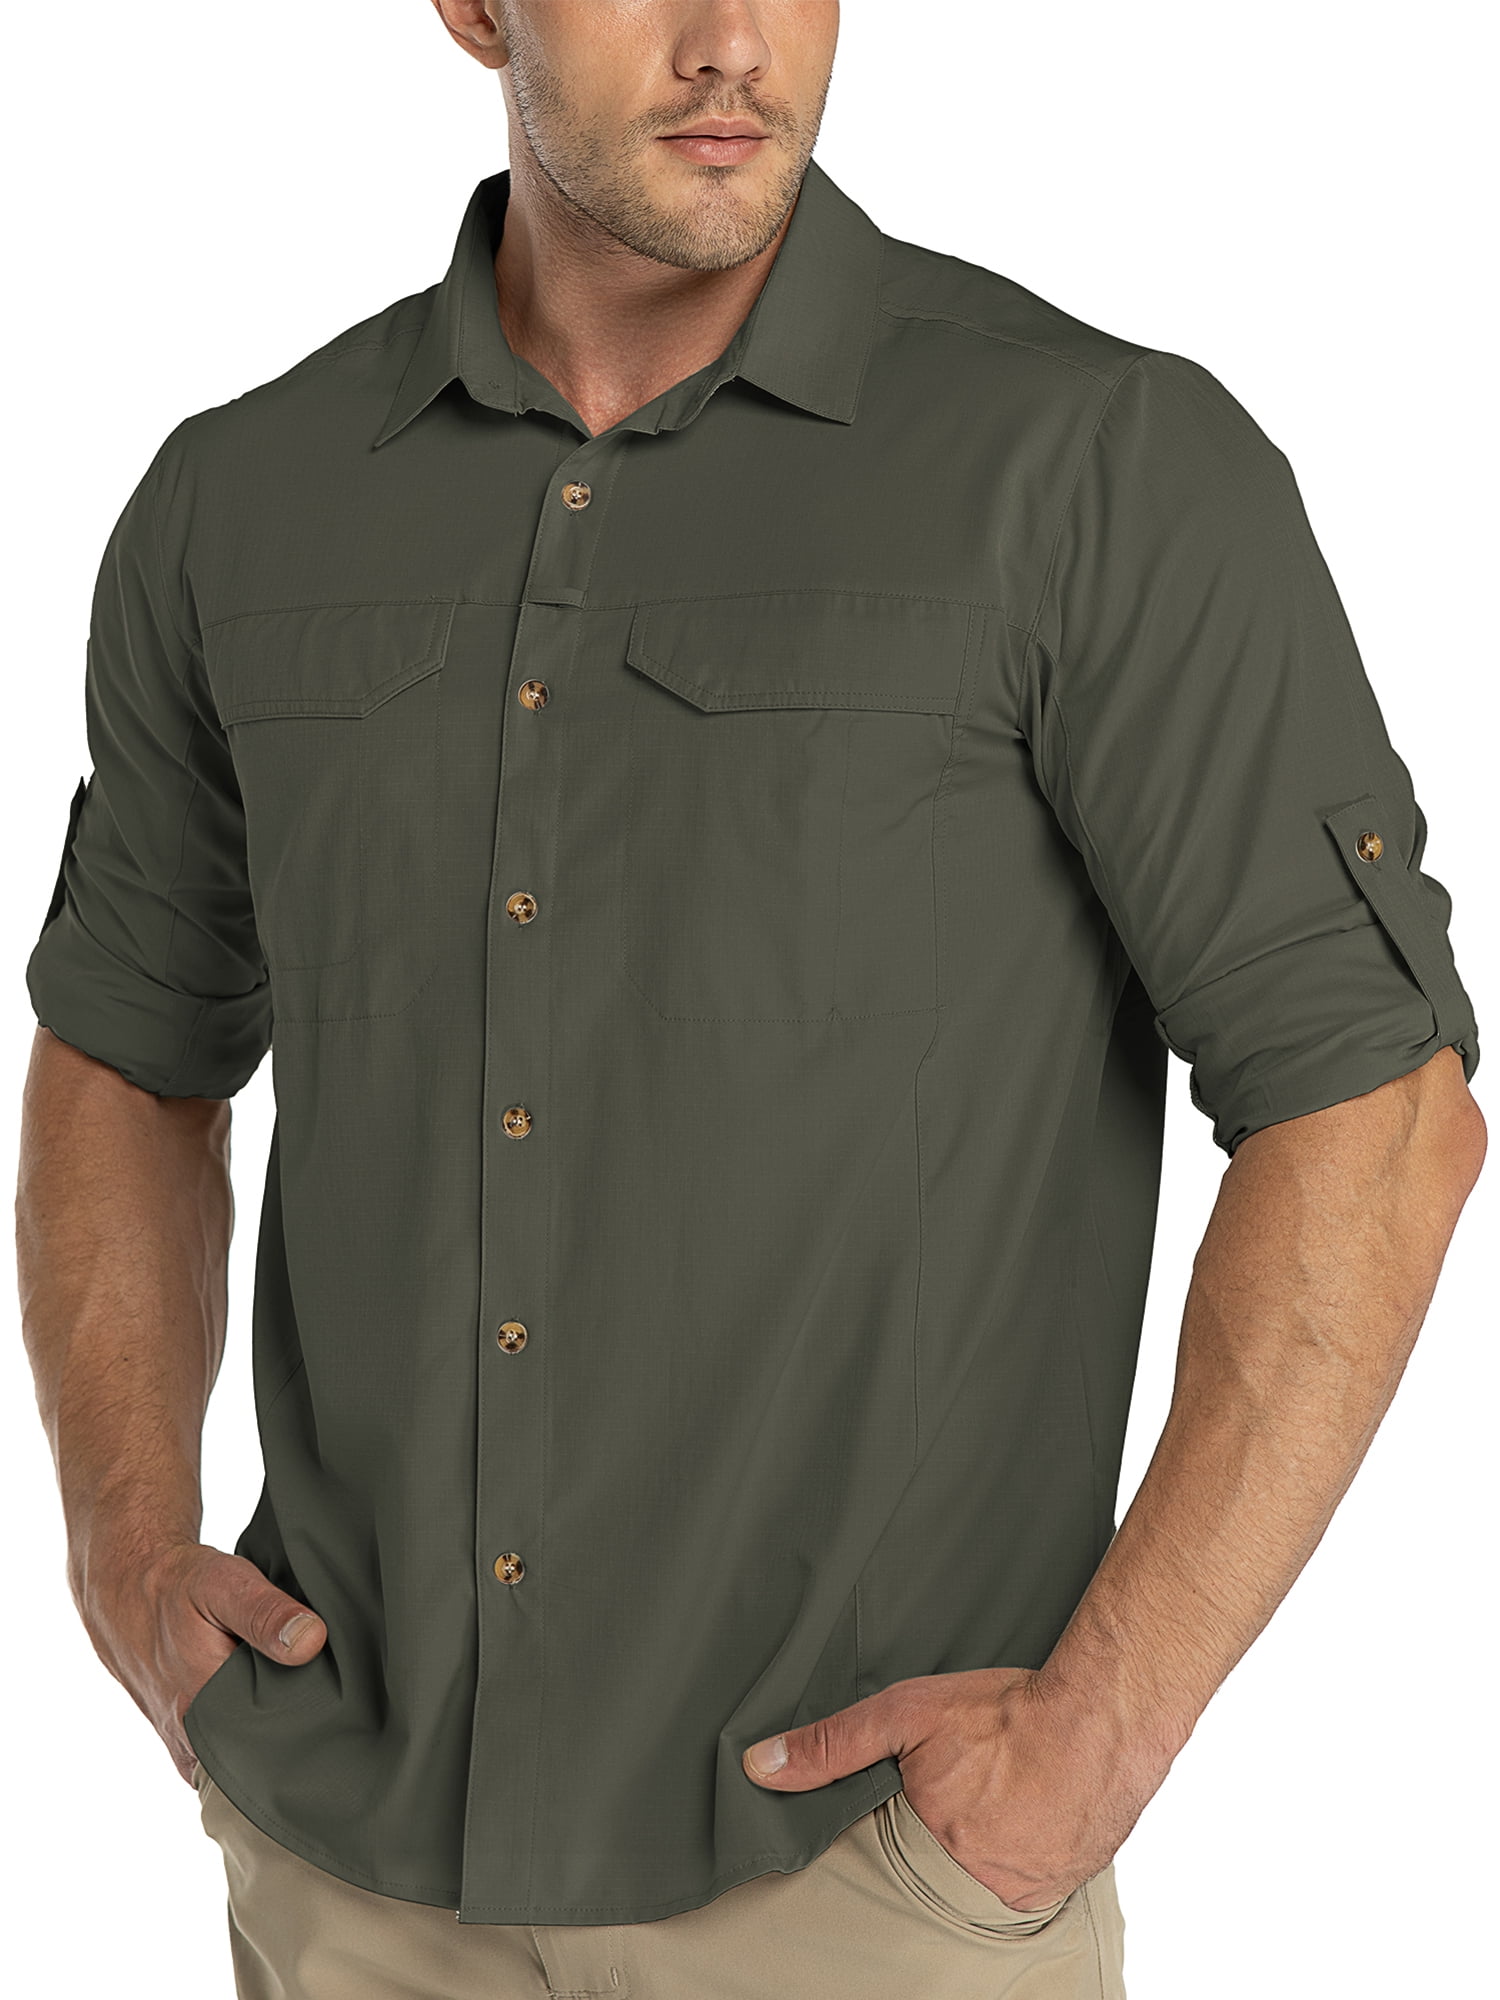 33,000ft Men's Long Sleeve Hiking Shirts Lightweight Quick Dry Sun  Protection UV Fishing Travel Shirt Outdoor Safari Outdoor